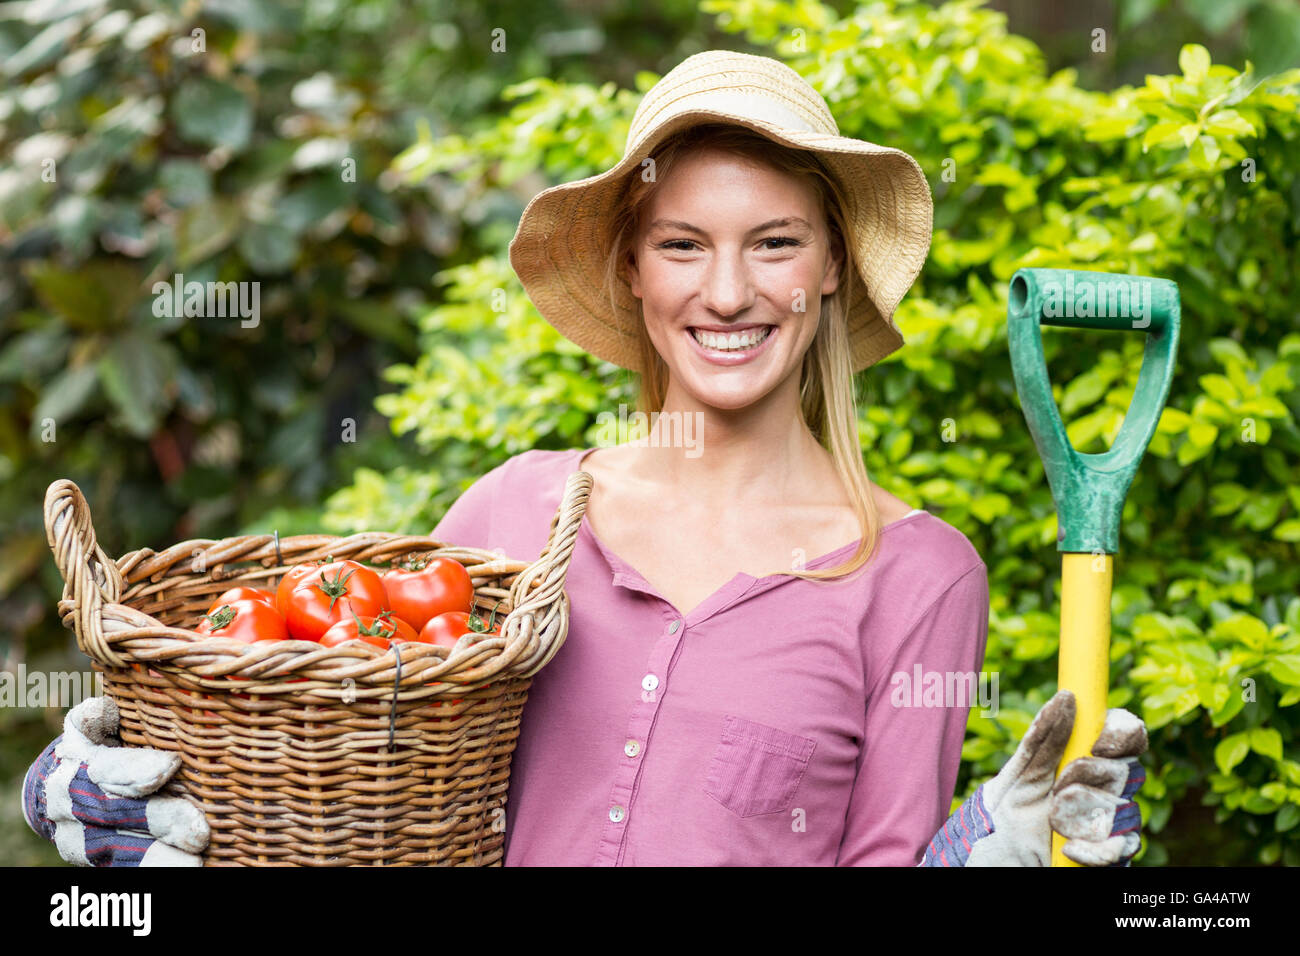 Female gardener holding tomato basket and work tool Stock Photo